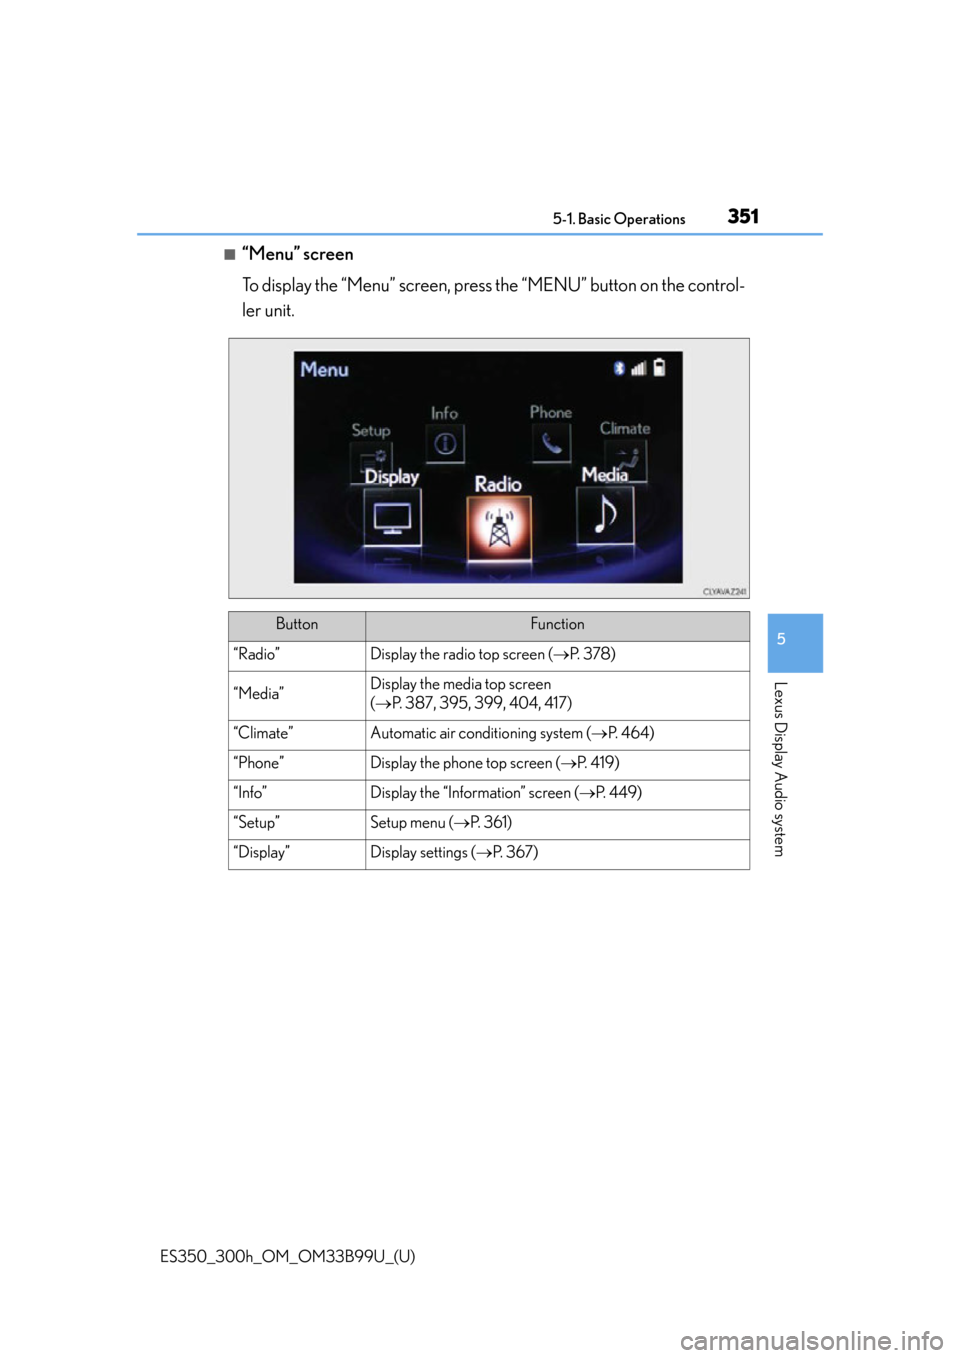 Lexus ES300h 2015  Other interior features / Owners Manual (OM33B99U) ES350_300h_OM_OM33B99U_(U)
3515-1. Basic Operations
5
Lexus Display Audio system
■“Menu” screen
To display the “Menu” screen, press the “MENU” button on the control-
ler unit.
ButtonFunc